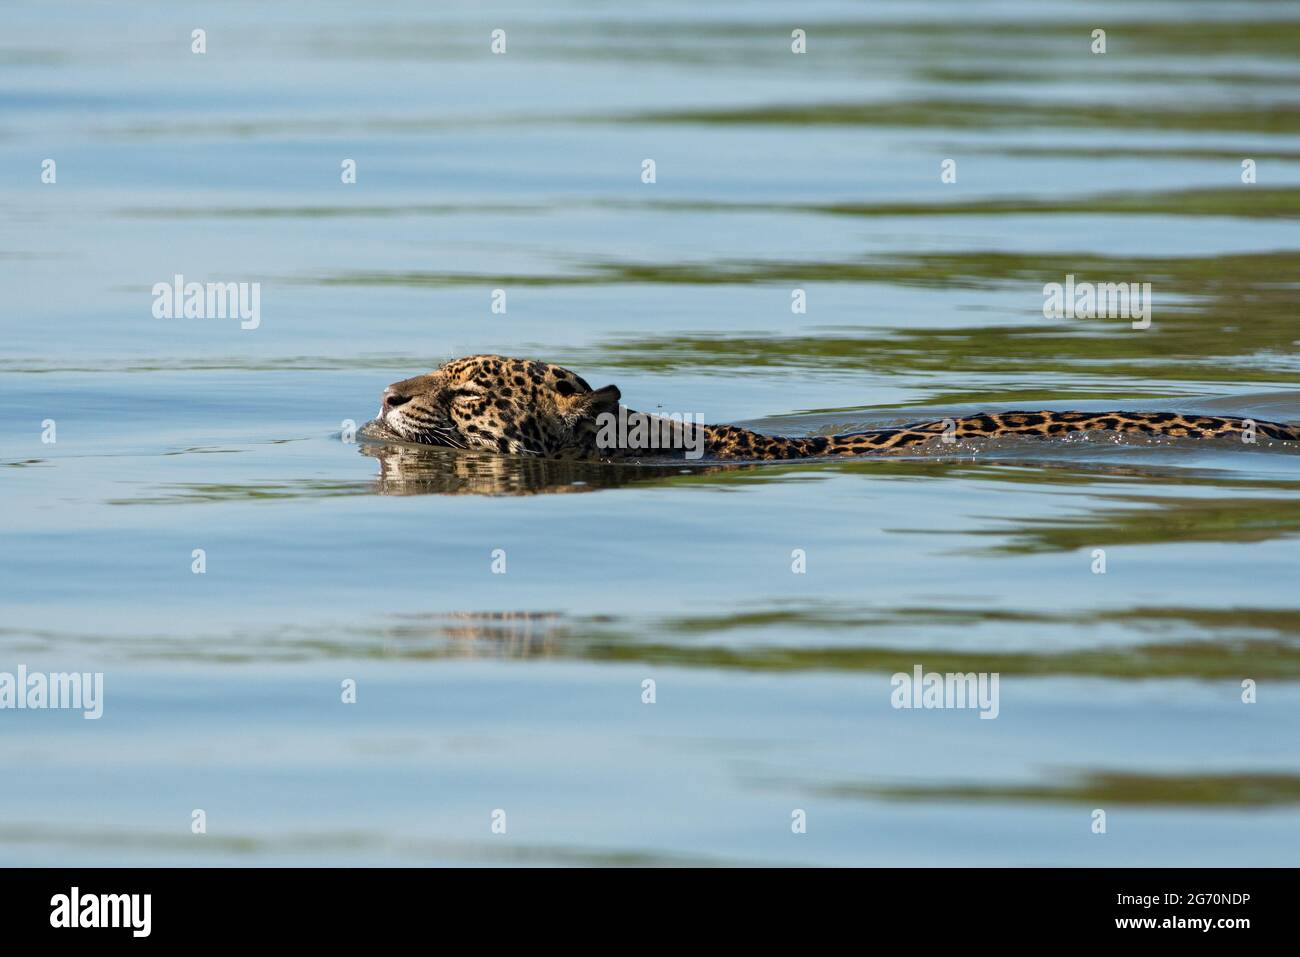 A Jaguar swimming across a river in North Pantanal, Brazil Stock Photo